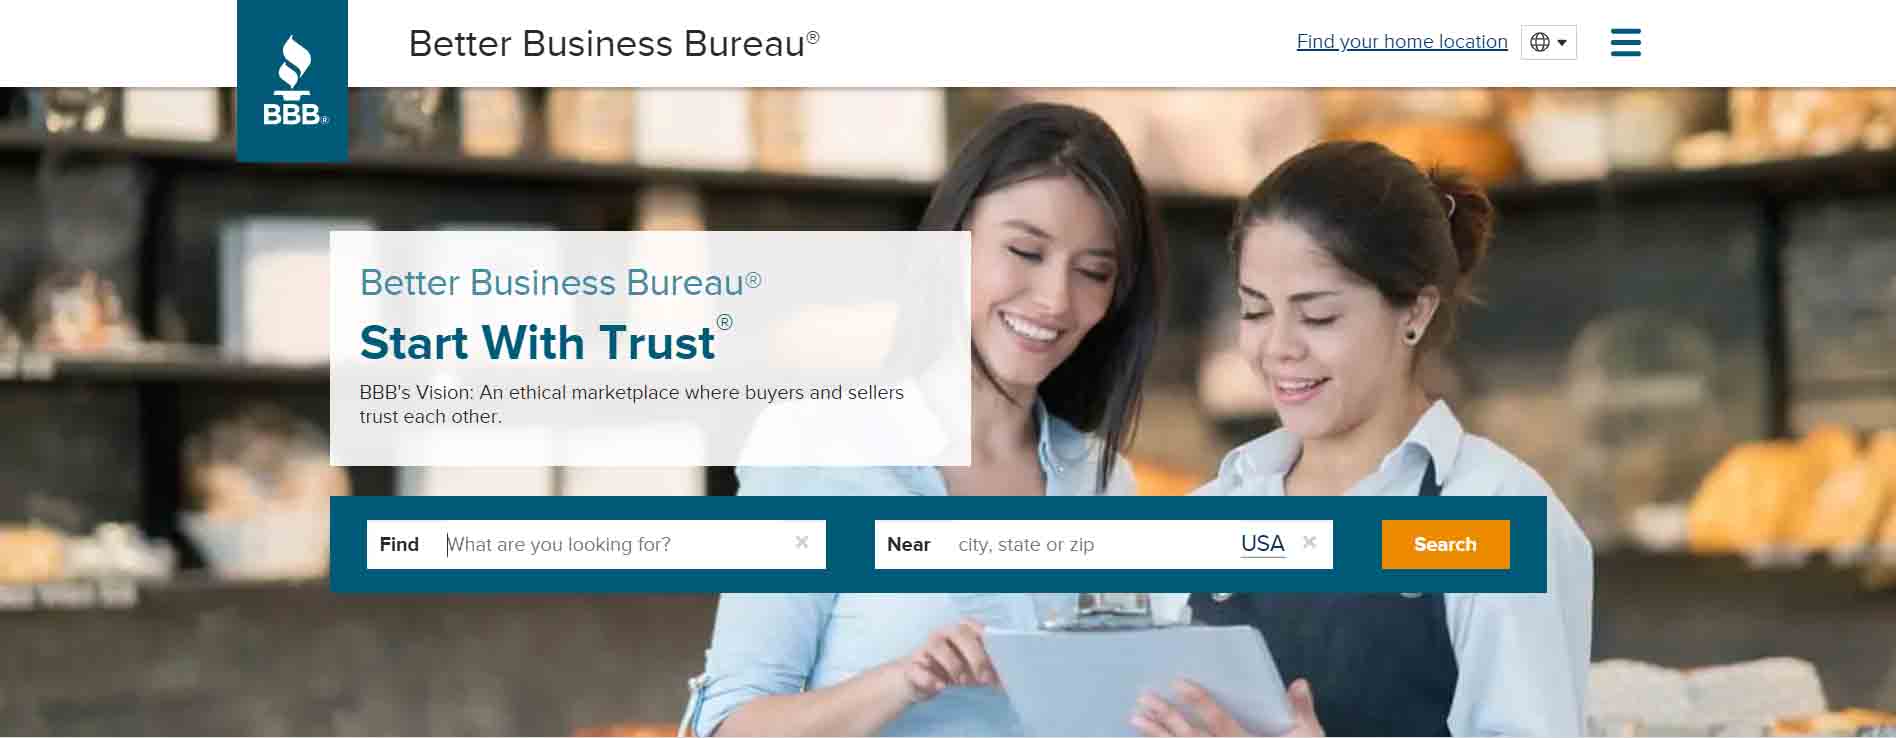 better business bureau main page